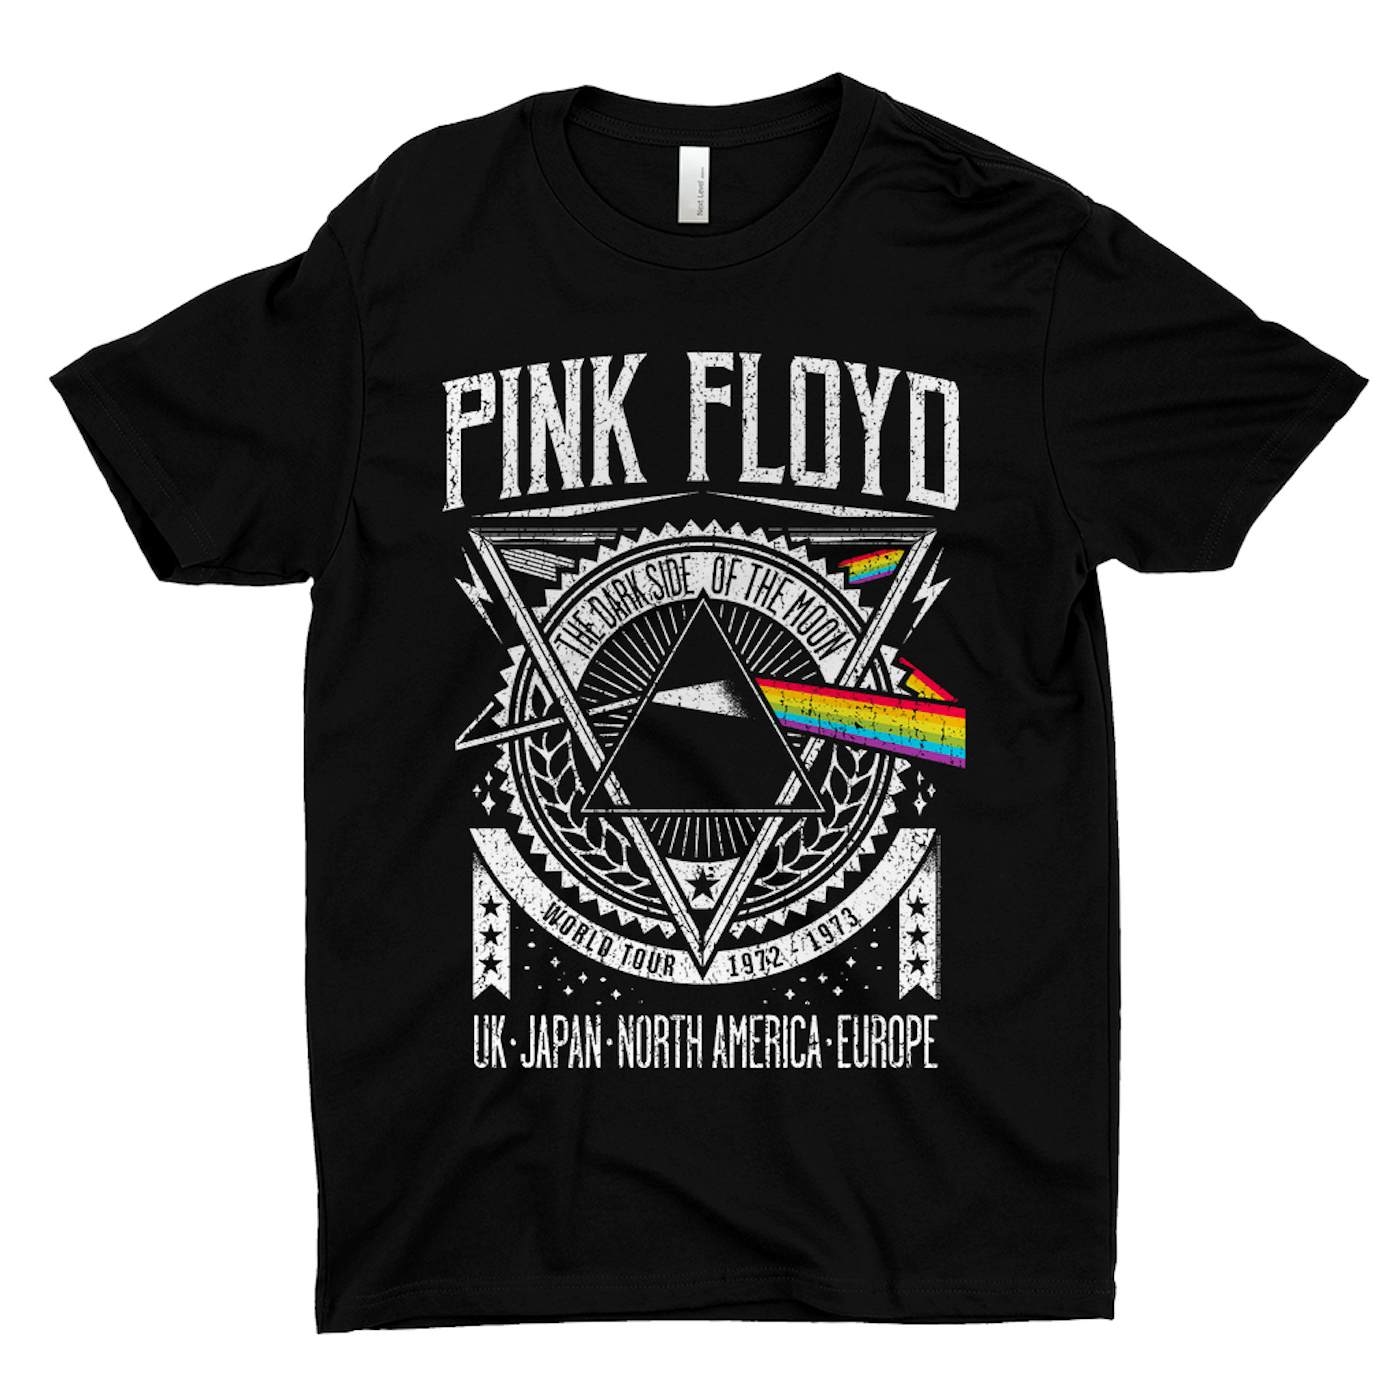 Pink Floyd T-Shirt | Dark Side of The Moon World Tour 1972-1973 Pink Floyd Shirt